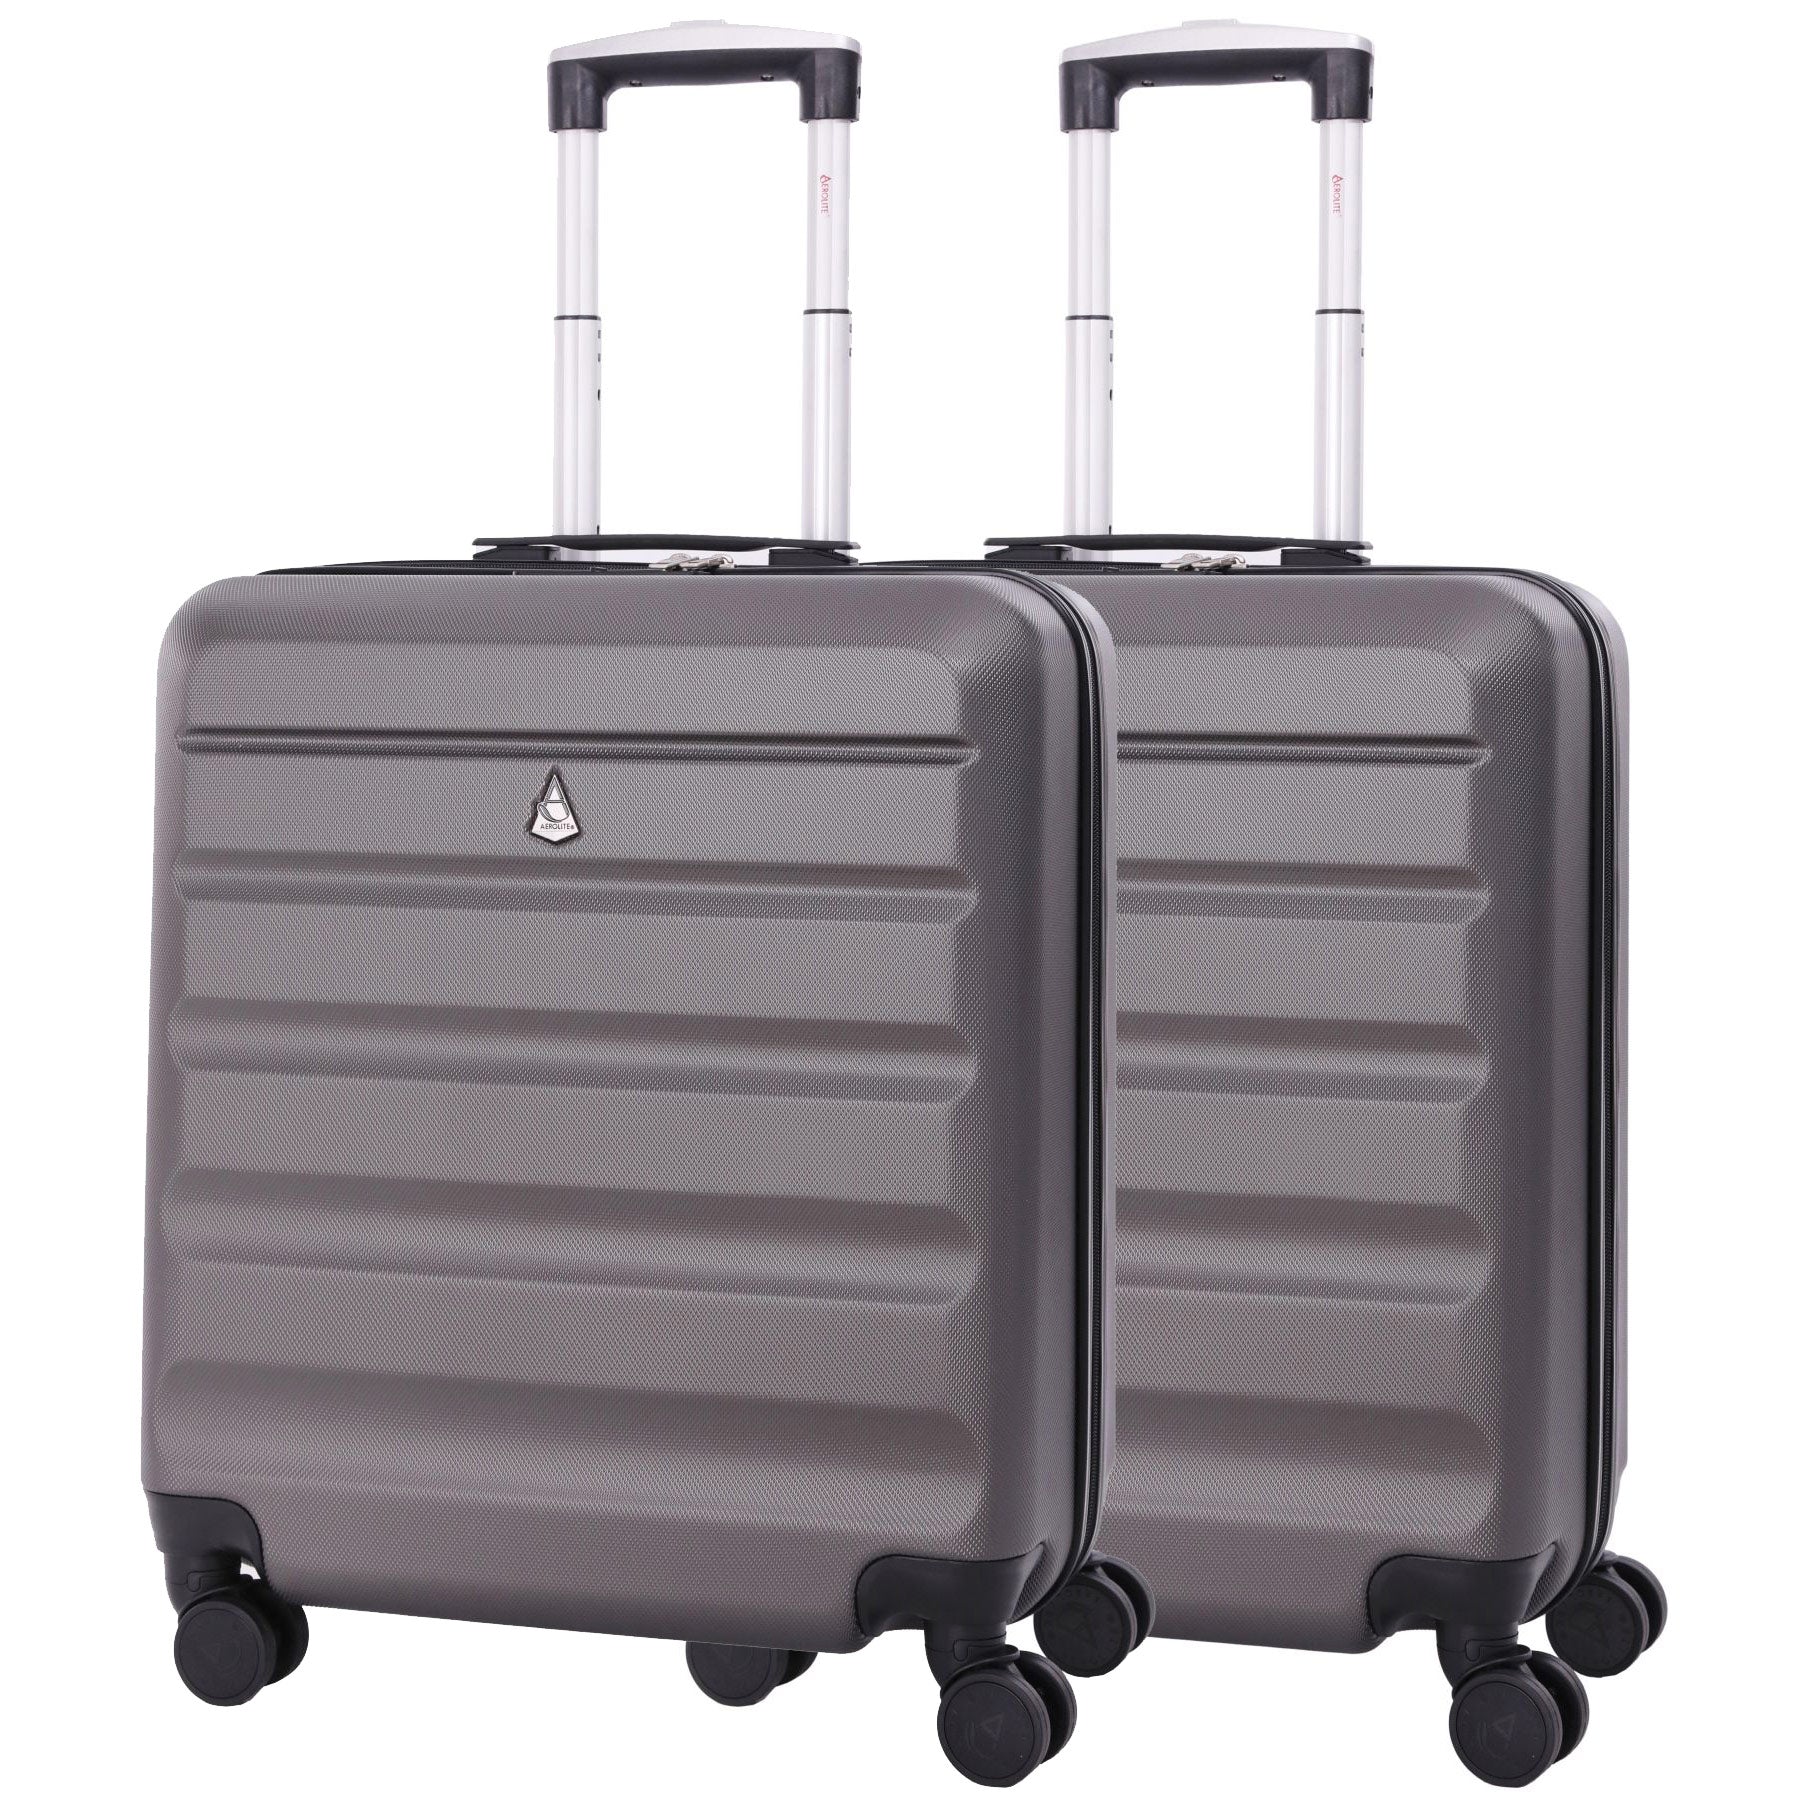 Aerolite easyJet Large Cabin (56x45x25cm) Lightweight Hard Shell Cabin Suitcase, MAXIMUM Possible Allowance for easyJet (Plus/Flexi), Jet2 & British Airways